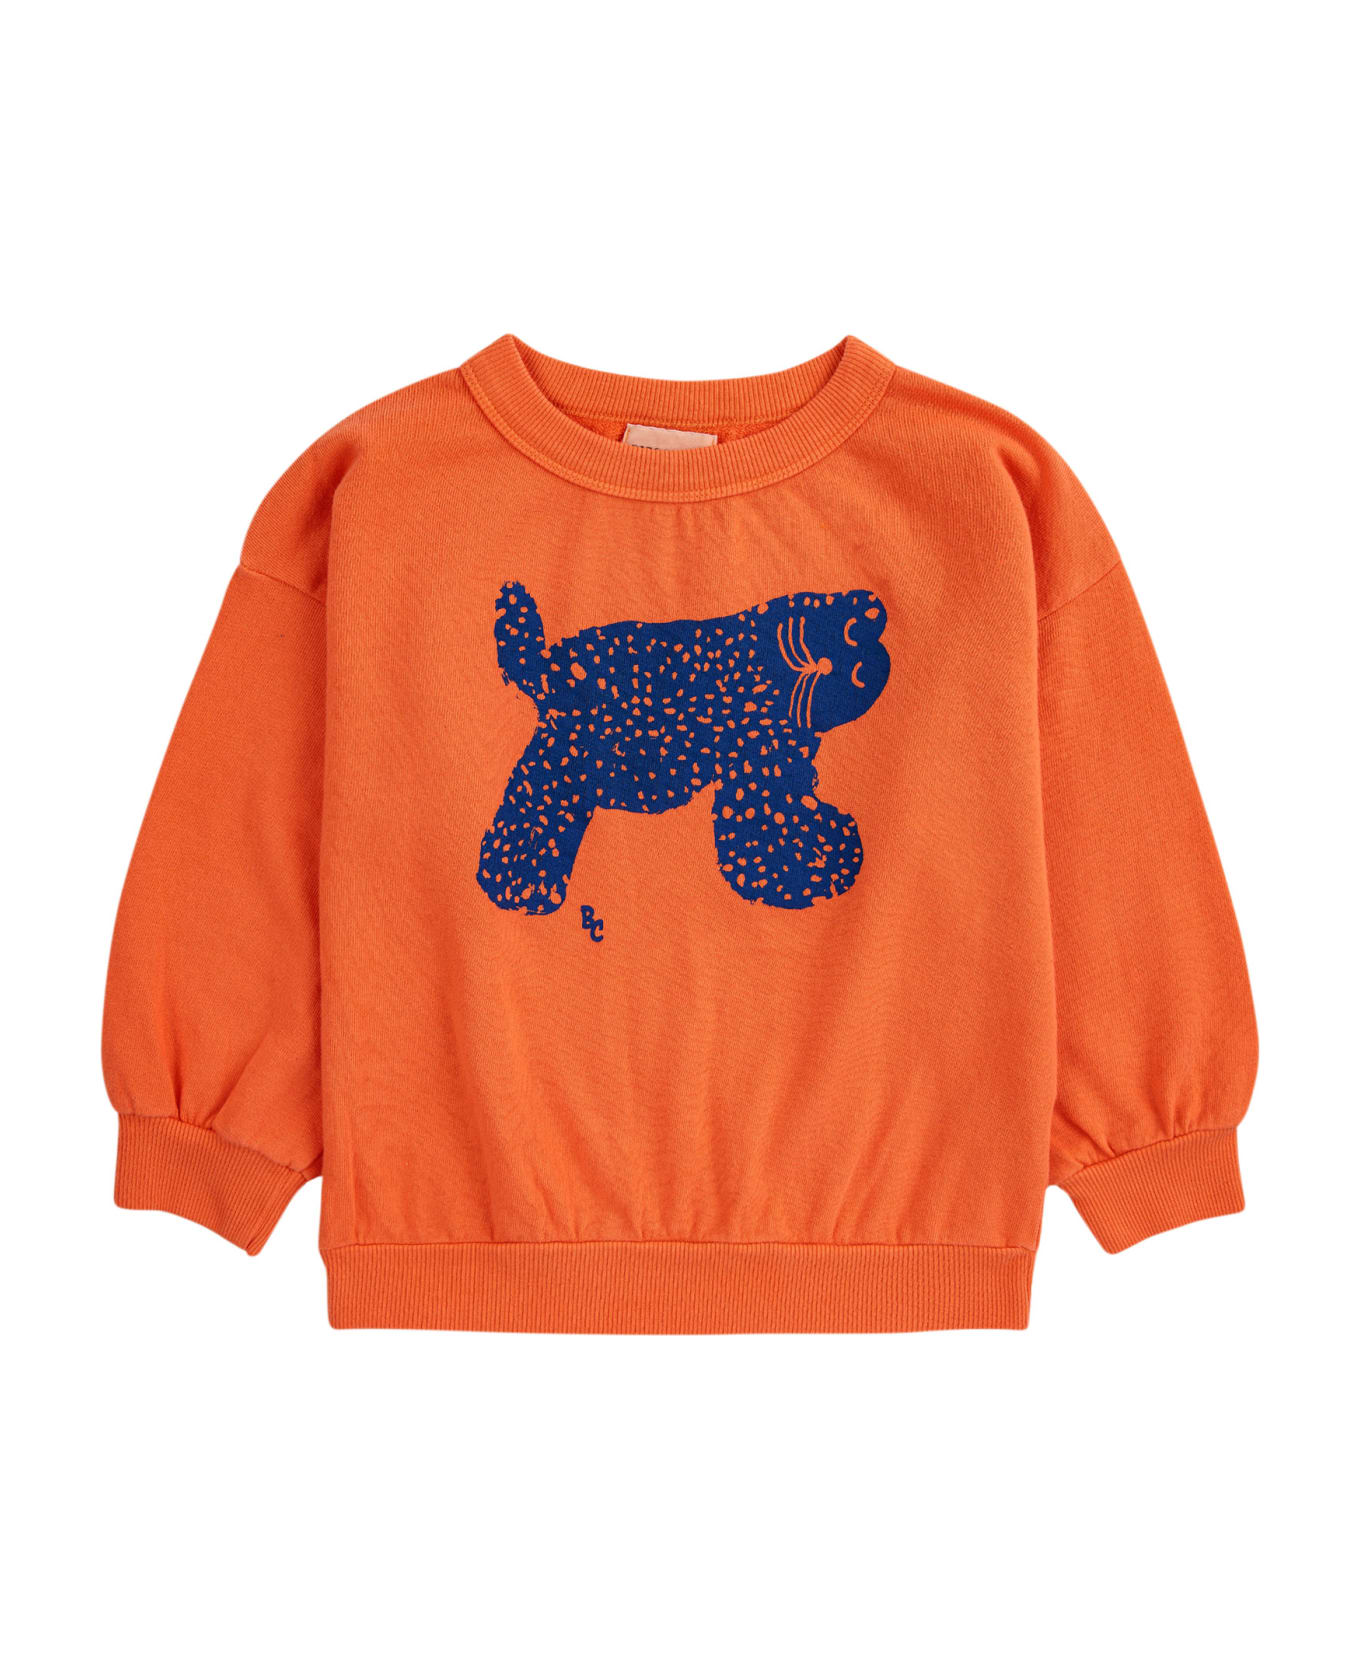 Bobo Choses Orange Sweatshirt For Kids With Cheetah - Orange ニットウェア＆スウェットシャツ